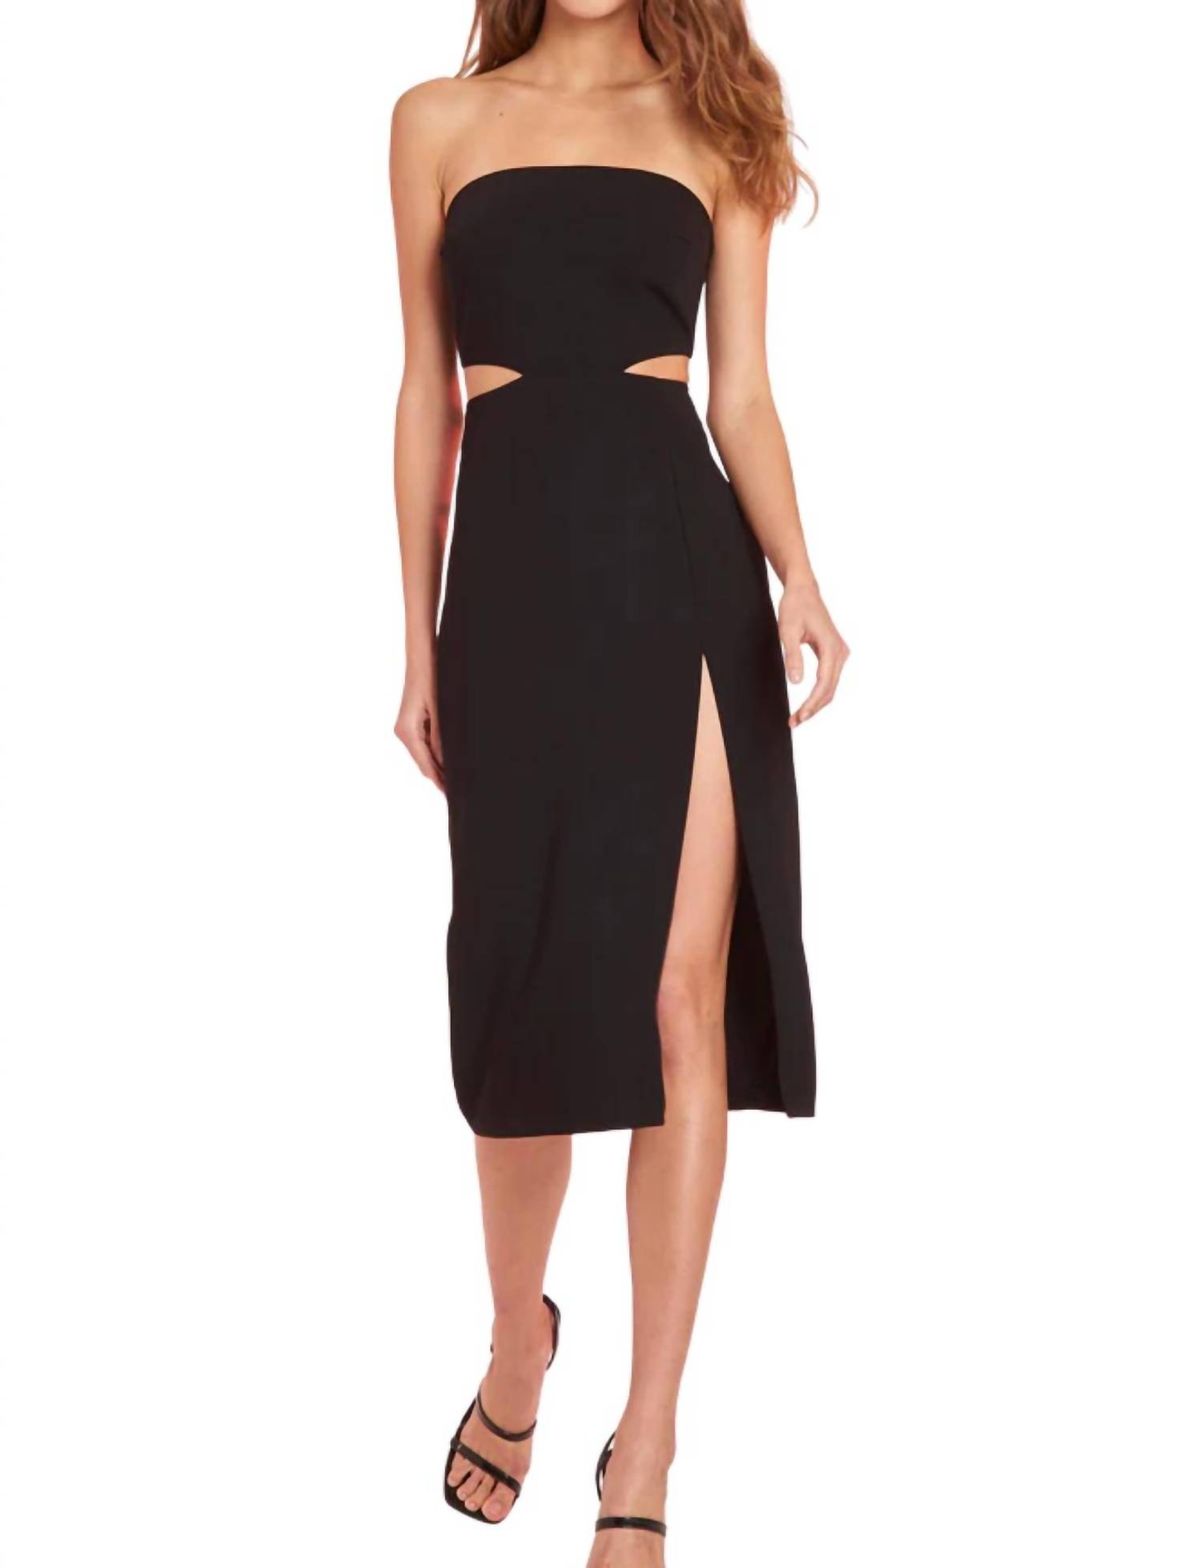 Style 1-2866584008-3236 Amanda Uprichard Size S Black Side Slit Dress on Queenly